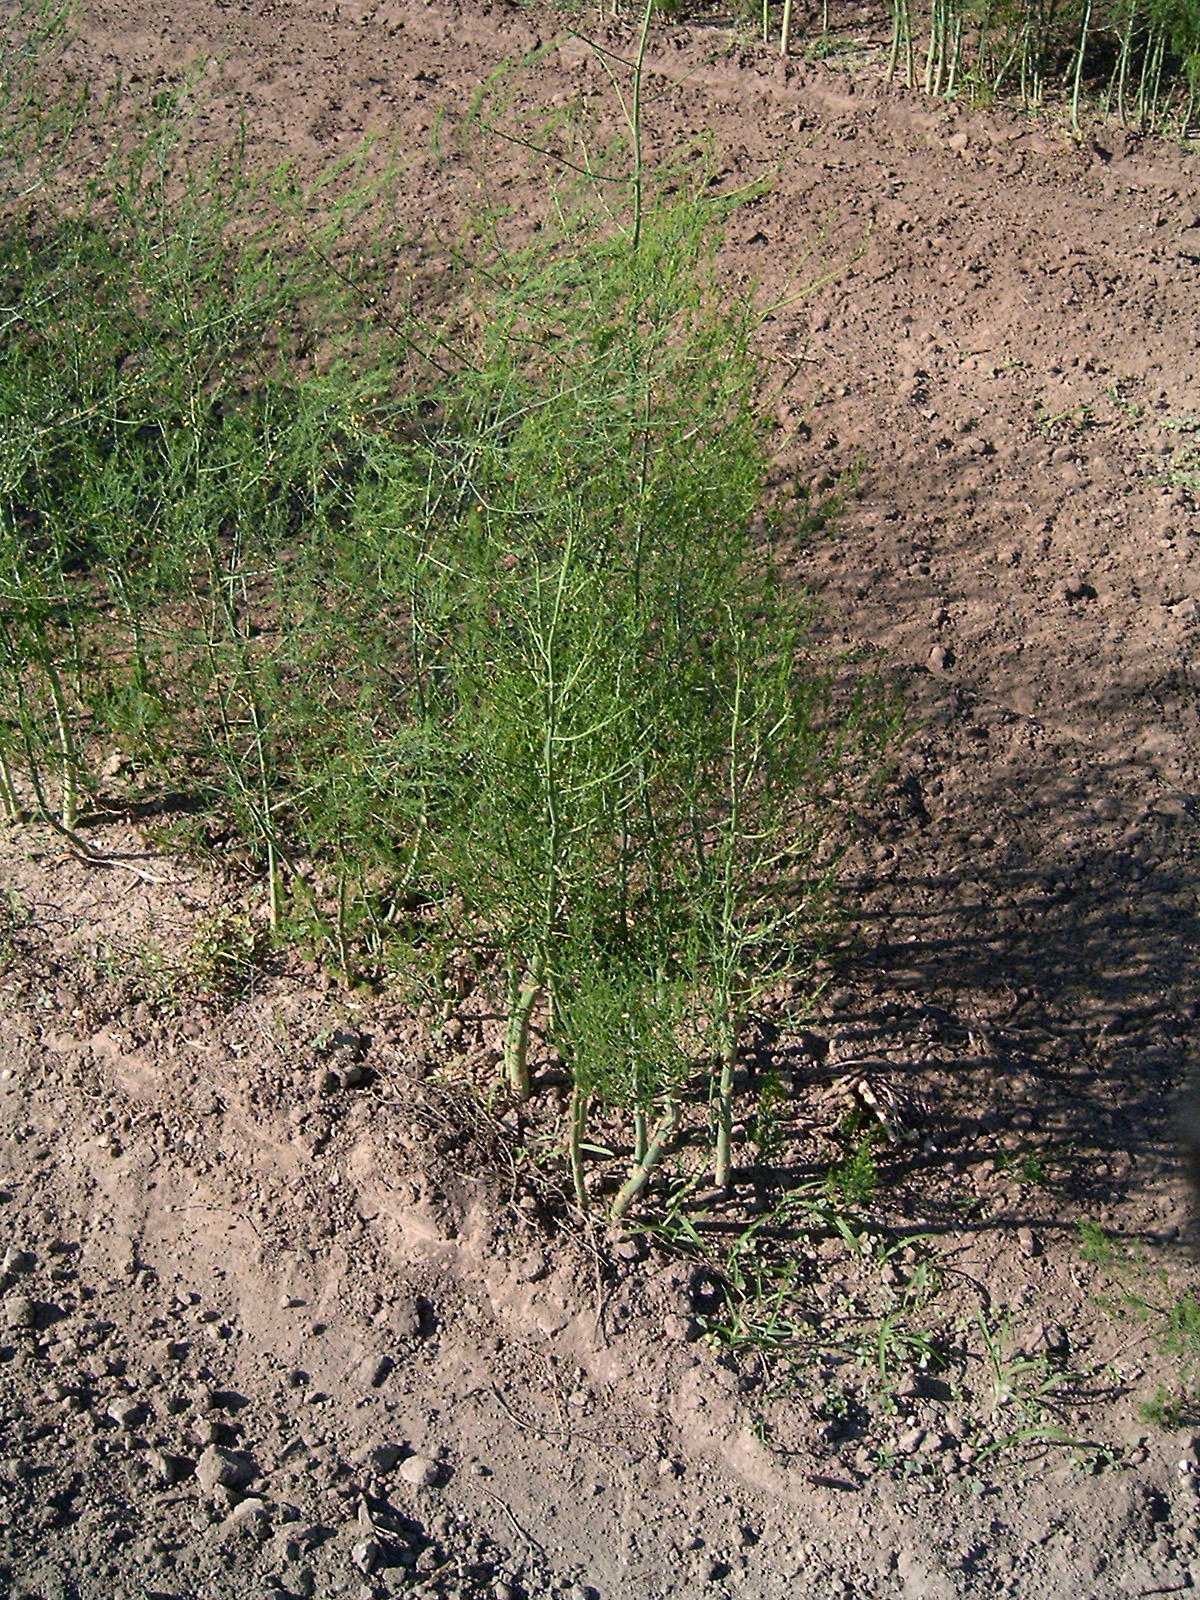 asparaugus plants growing in dirt plot